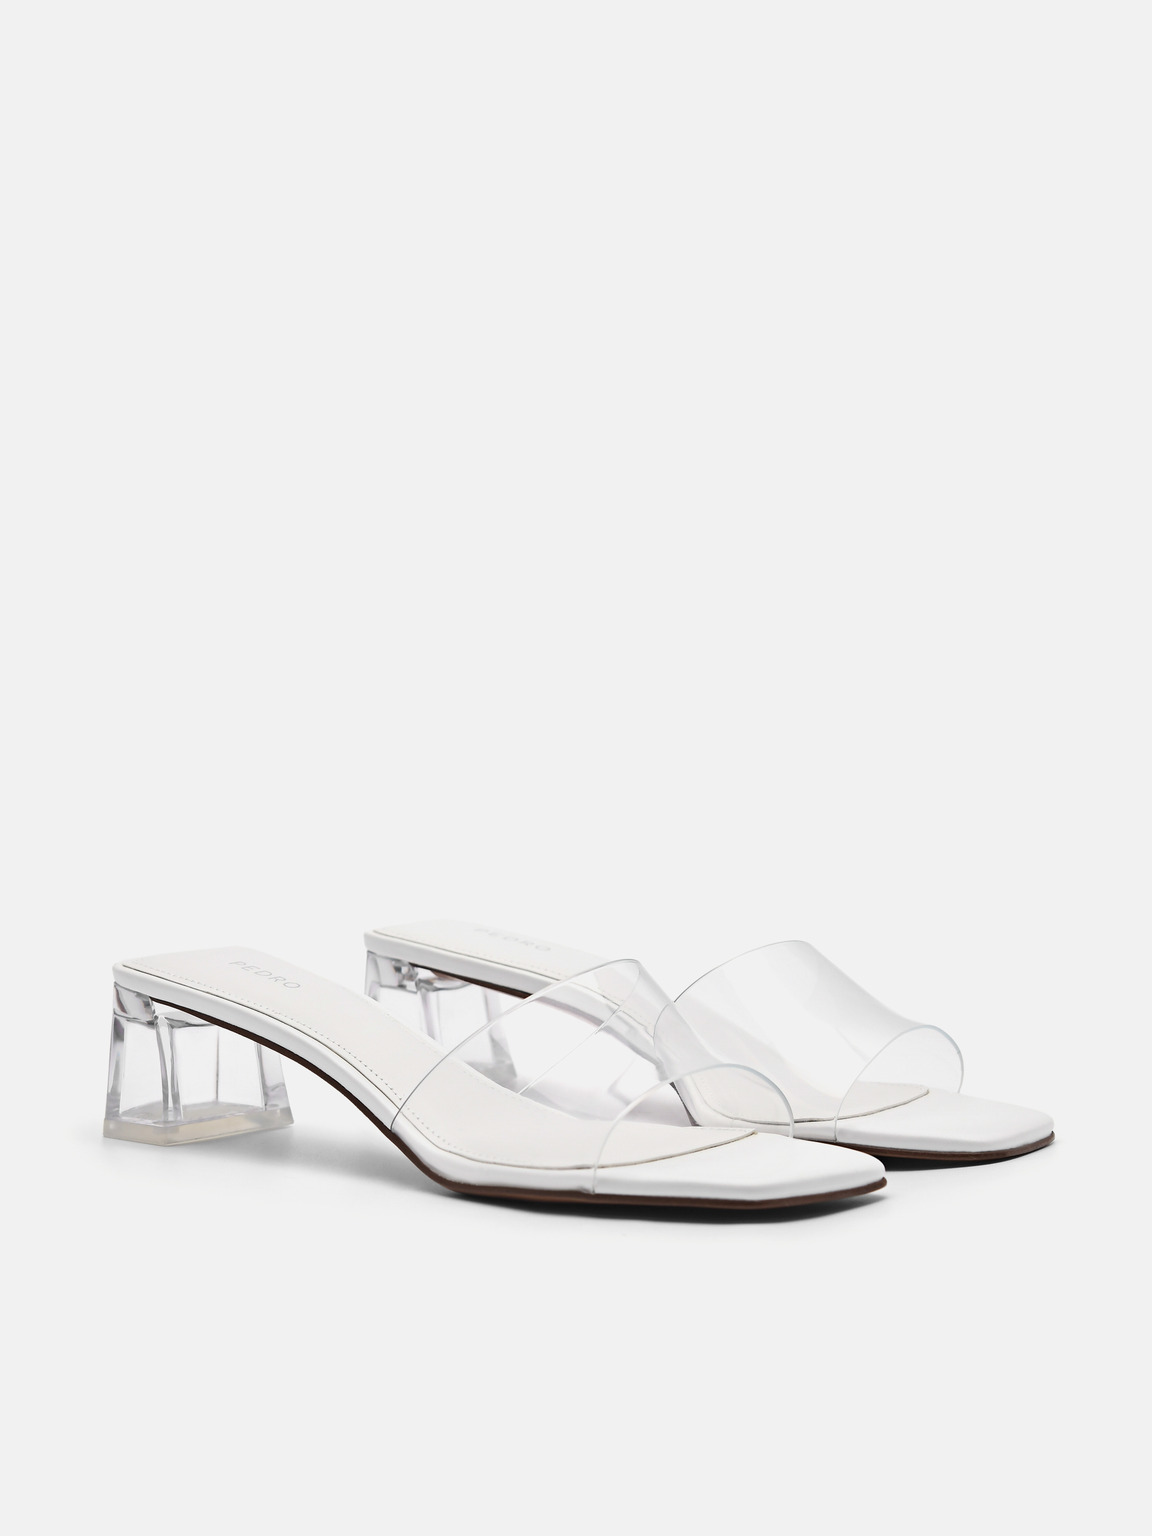 Megan Heel Sandals, White